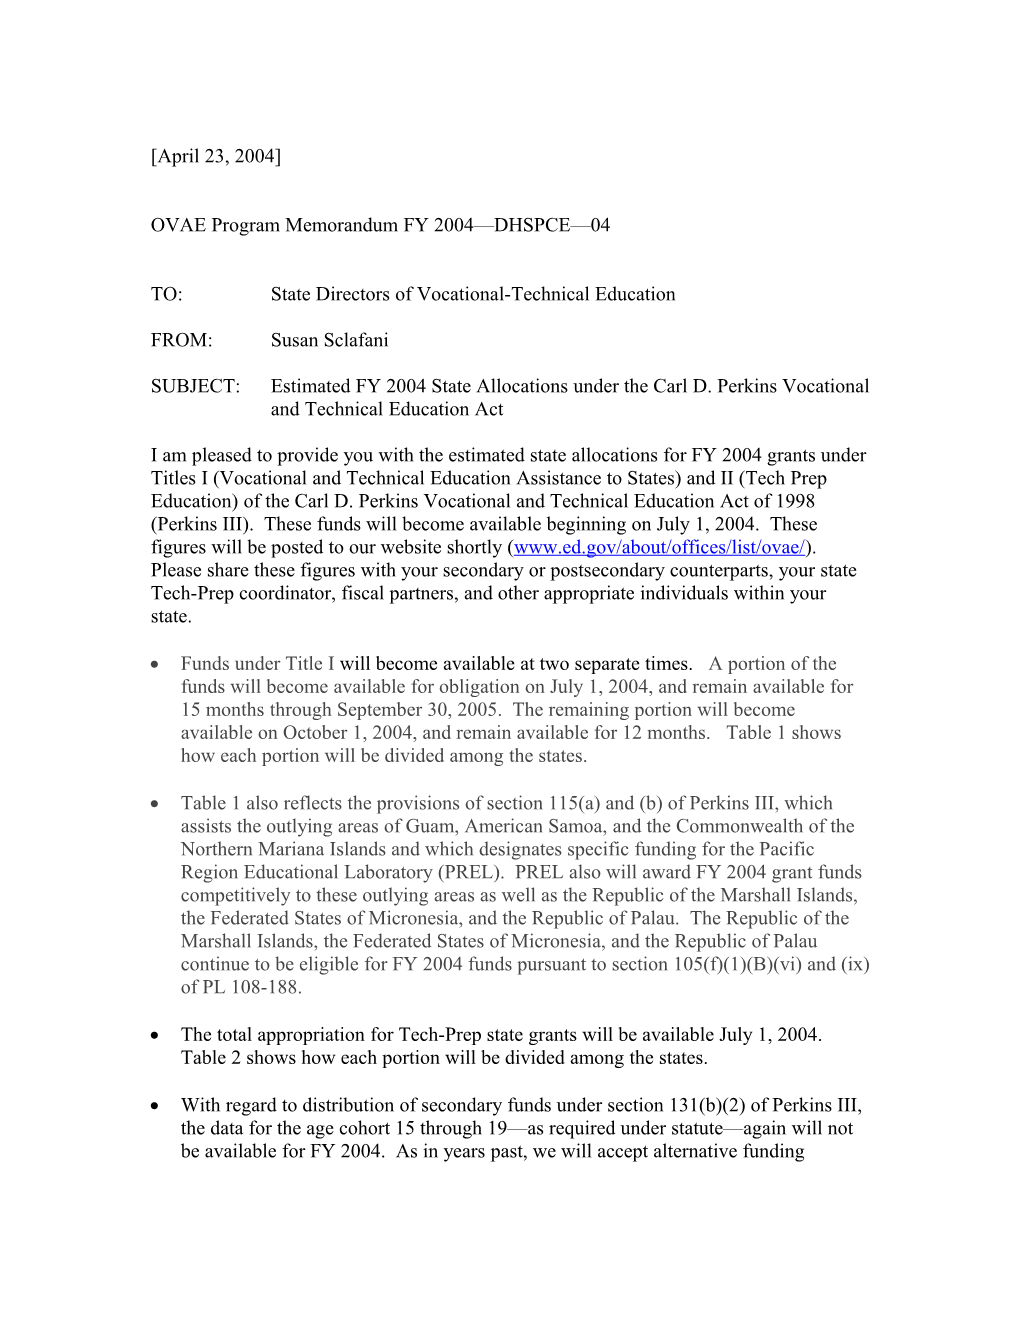 OVAE Program Memorandum FY 2004 DHSPCE 04